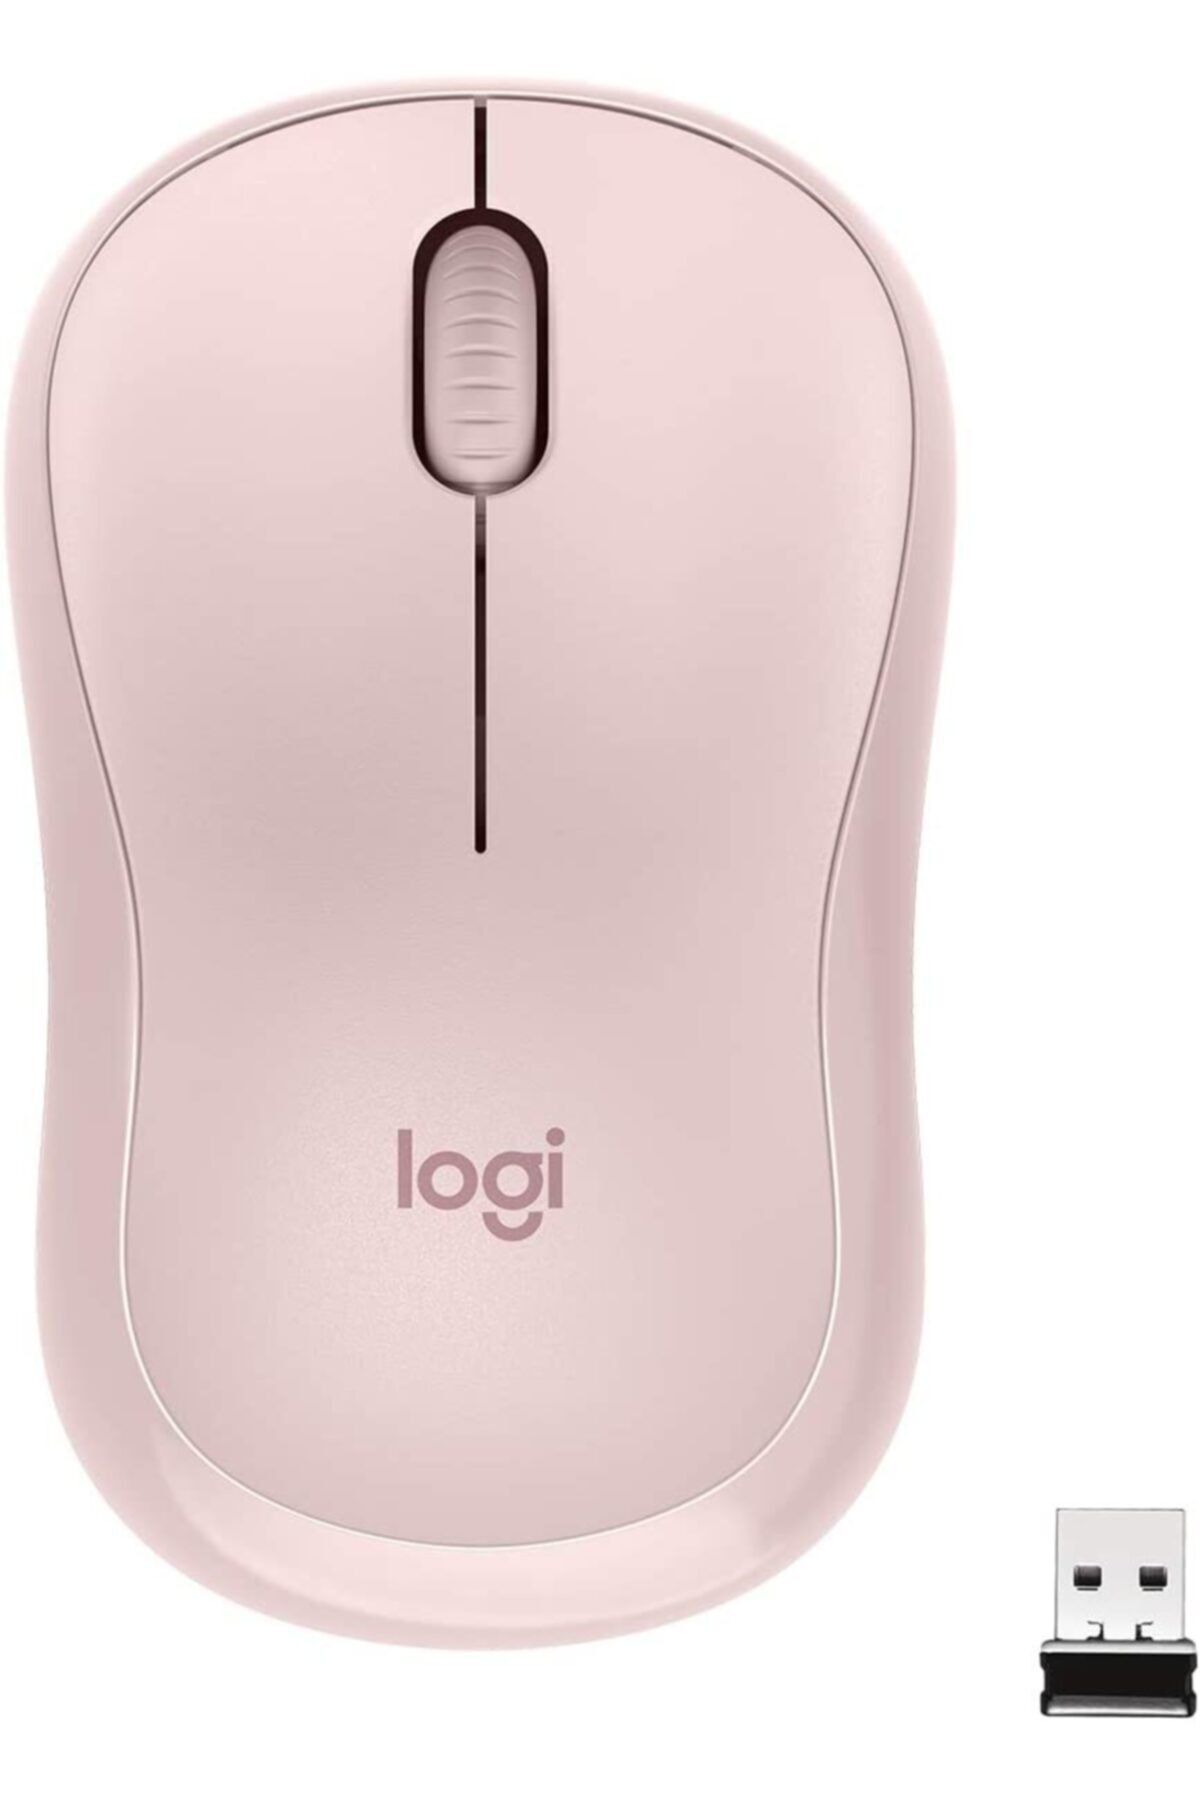 logitech M220 Sessiz Kablosuz Mouse Gül 910-006129